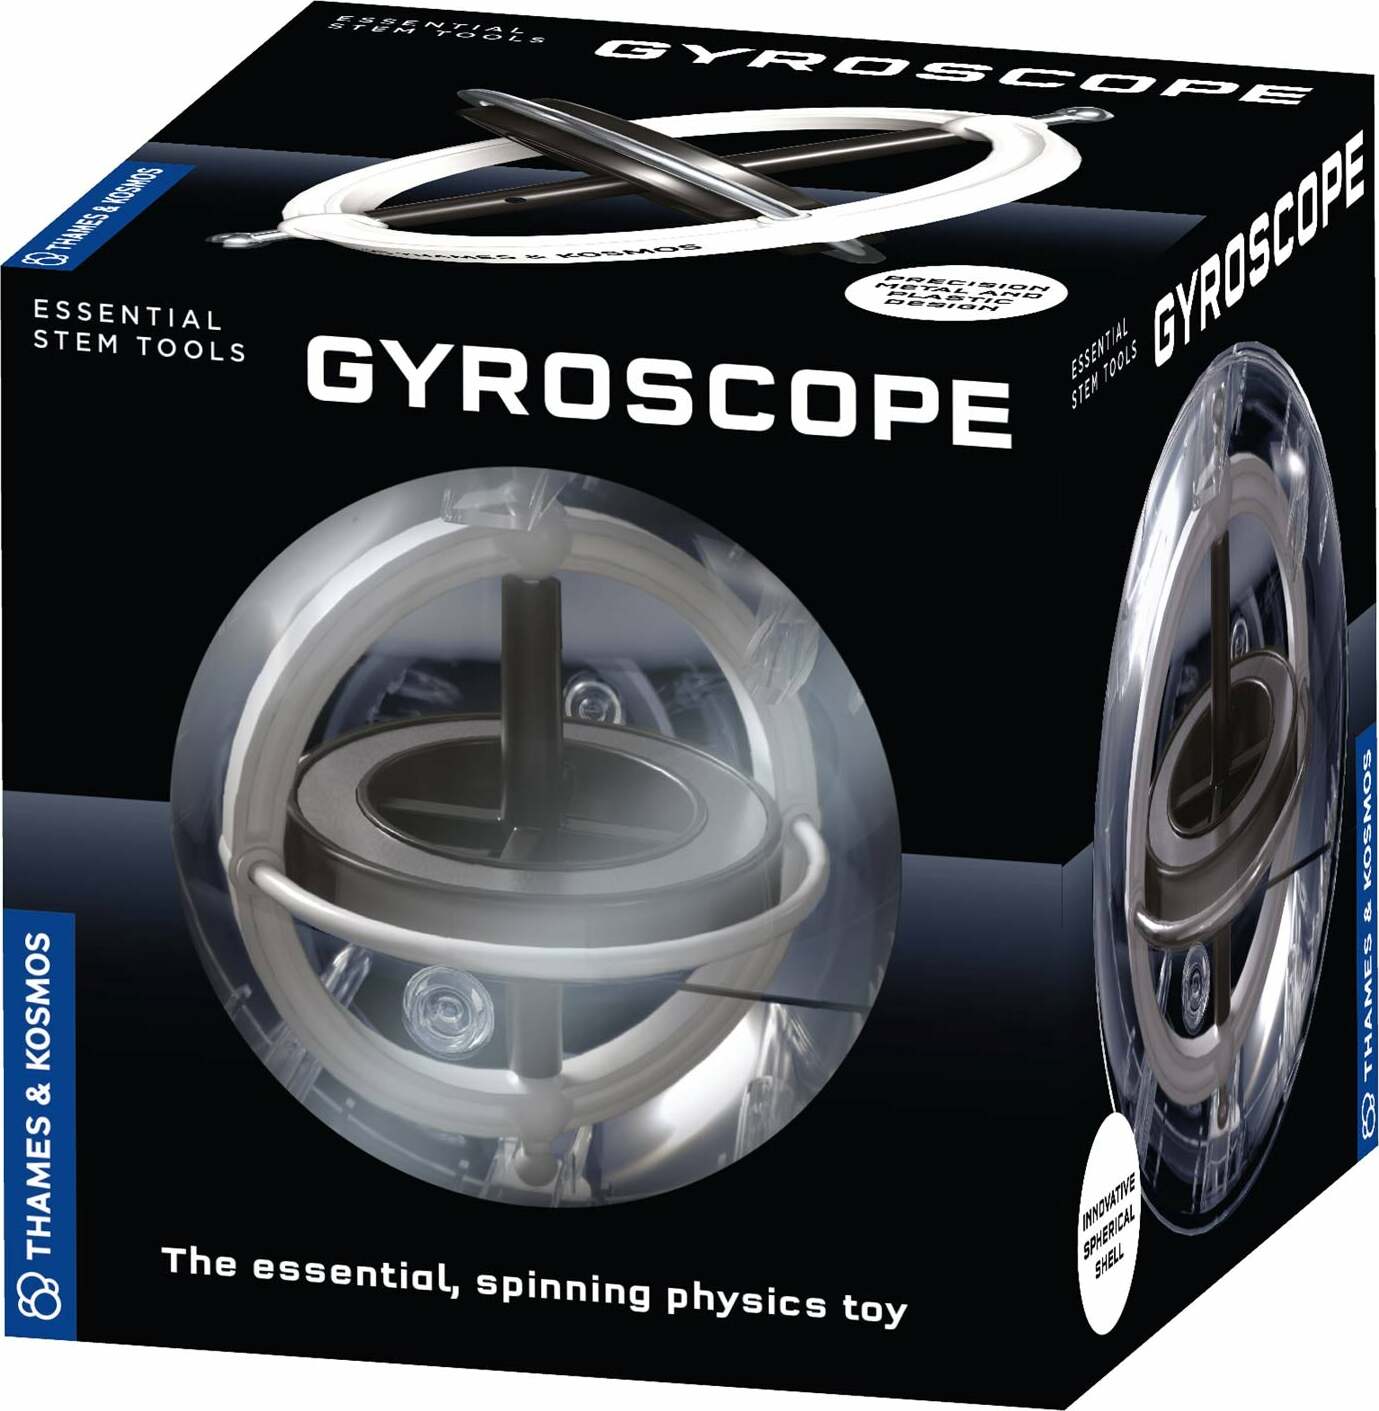 The Thames &amp; Kosmos Gyroscope